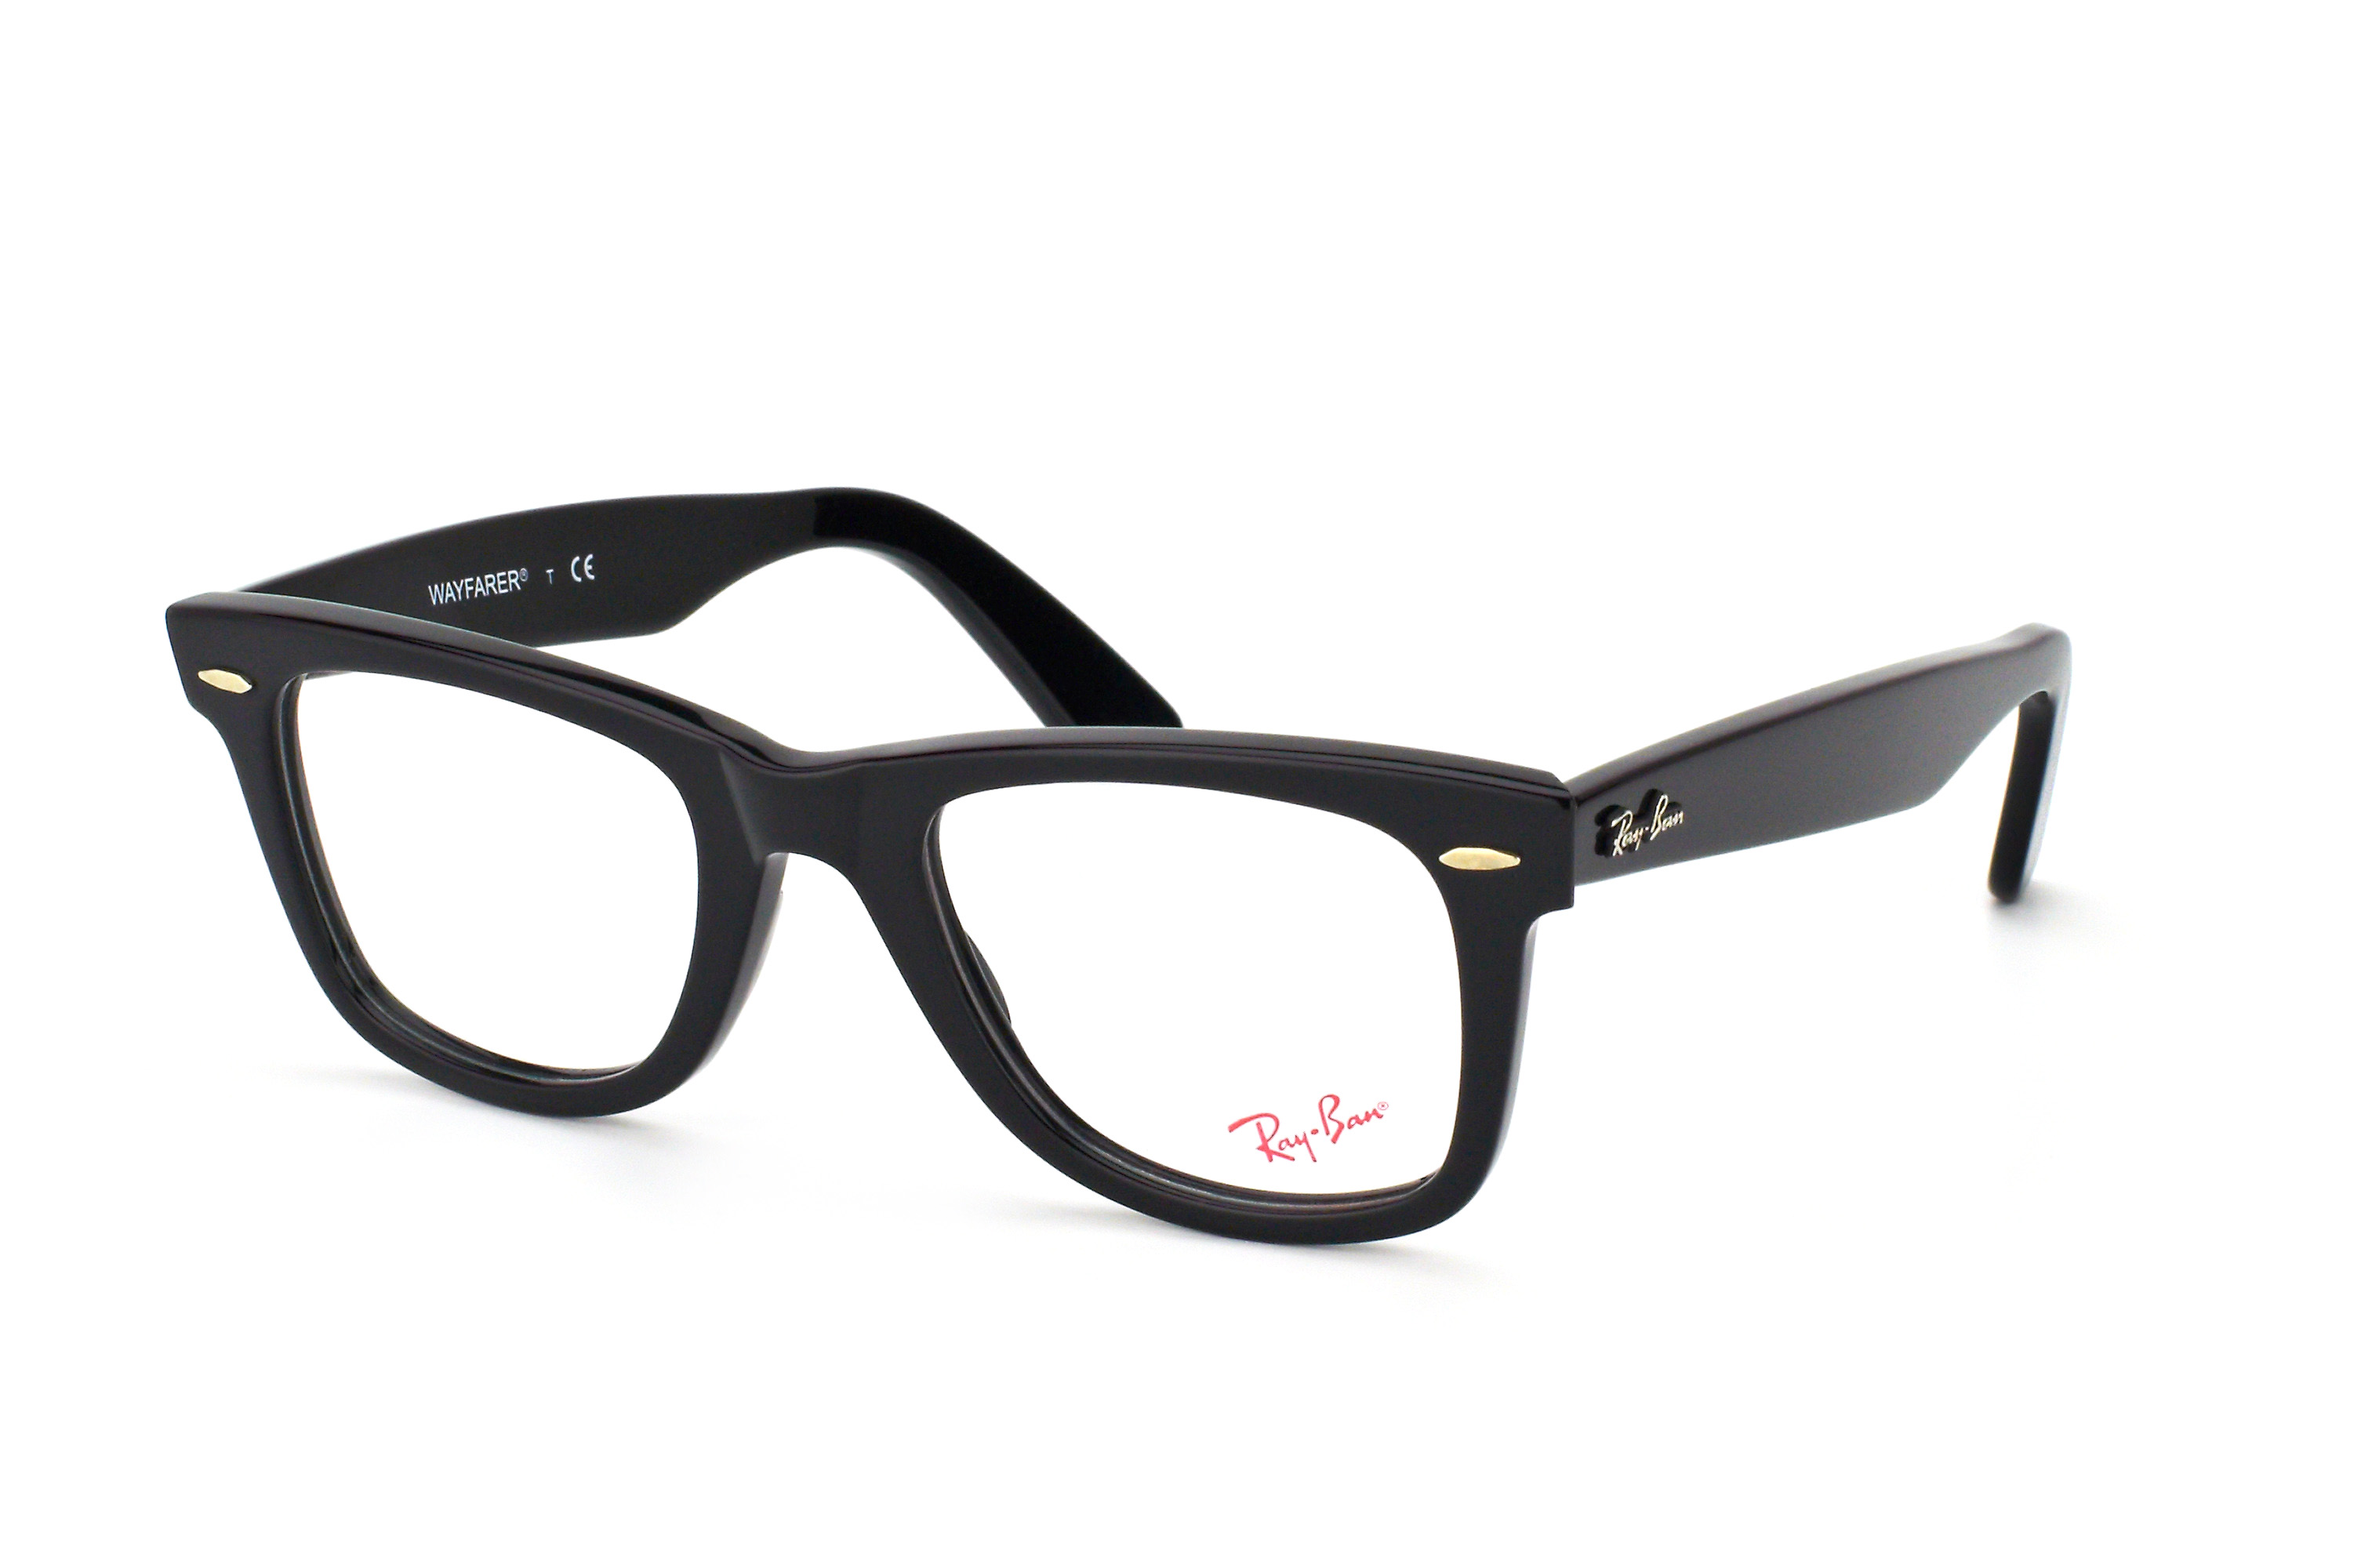 Buy Ray-Ban Original Wayfarer RX 5121 2000 Glasses